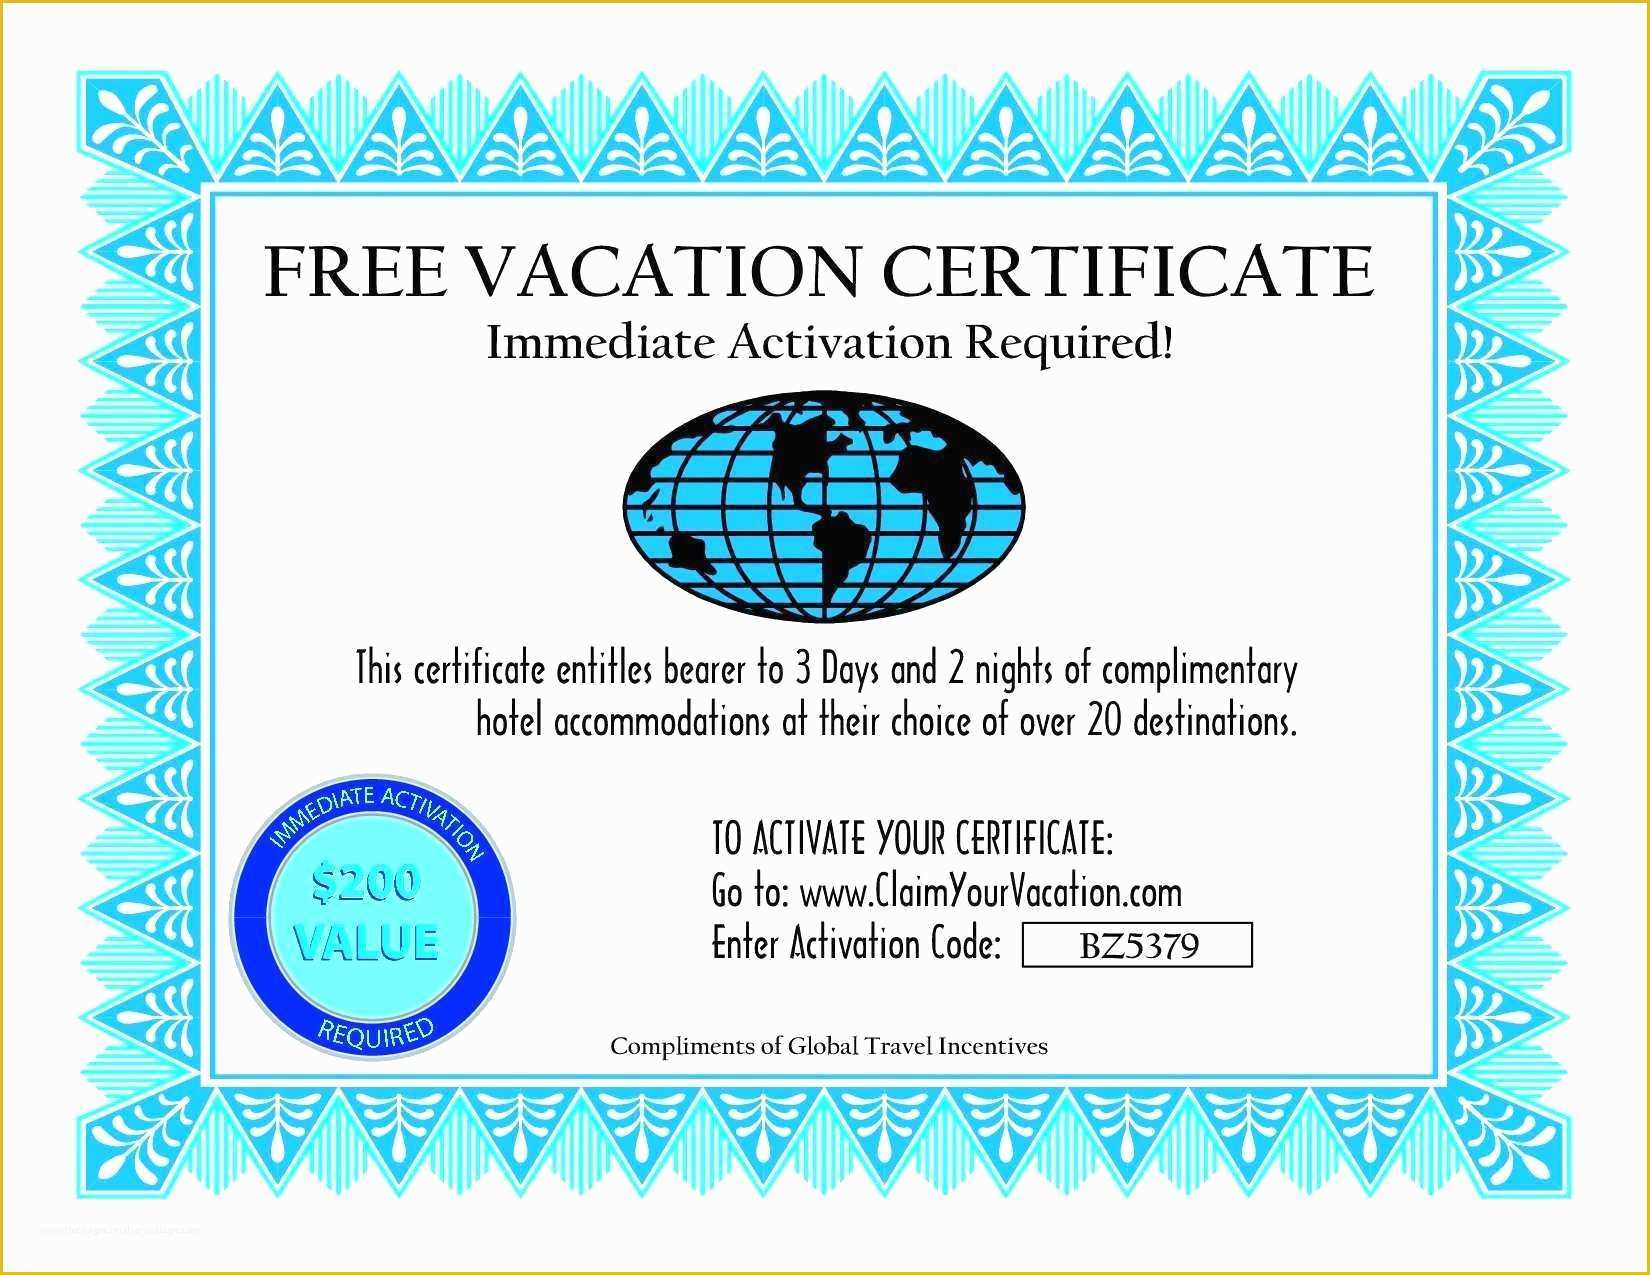 printable-travel-gift-certificate-template-printable-world-holiday